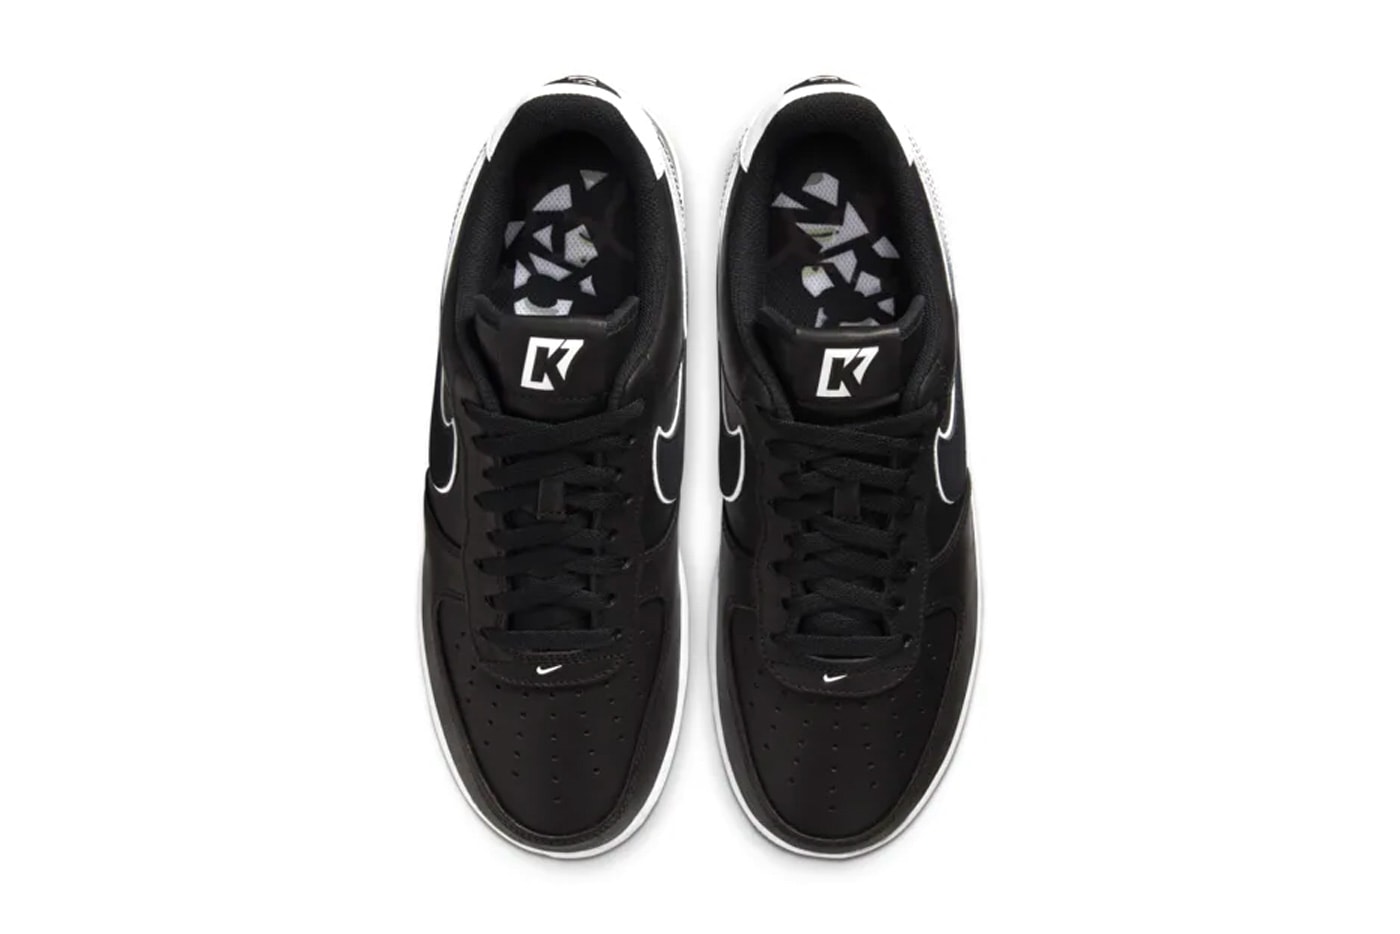 Colin Kaepernick x Nike Air Force 1 聯乘鞋款官方圖輯釋出